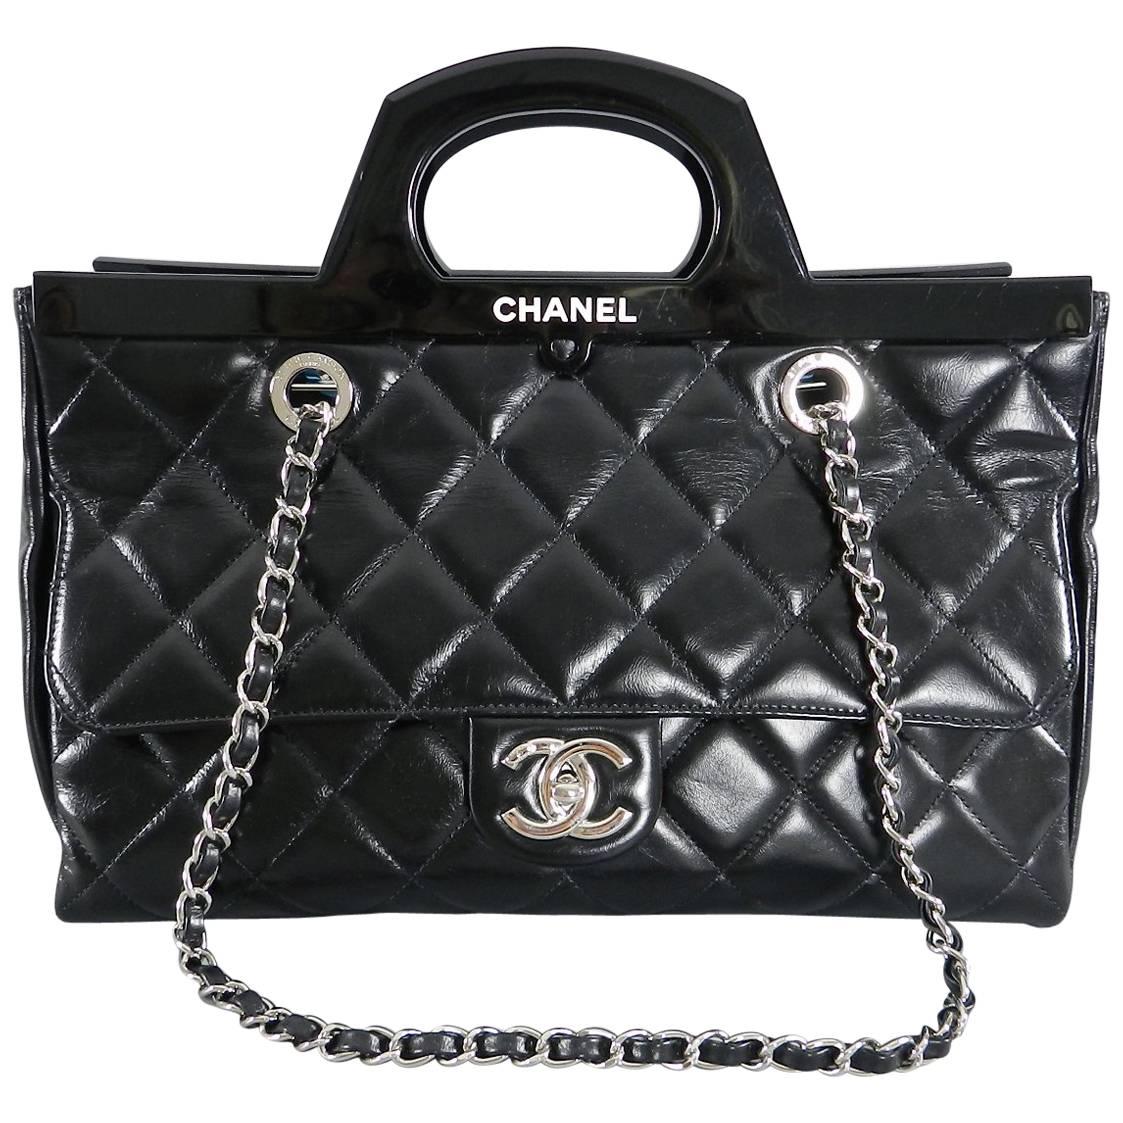 Chanel 15B Small Glazed Black CC delivery tote